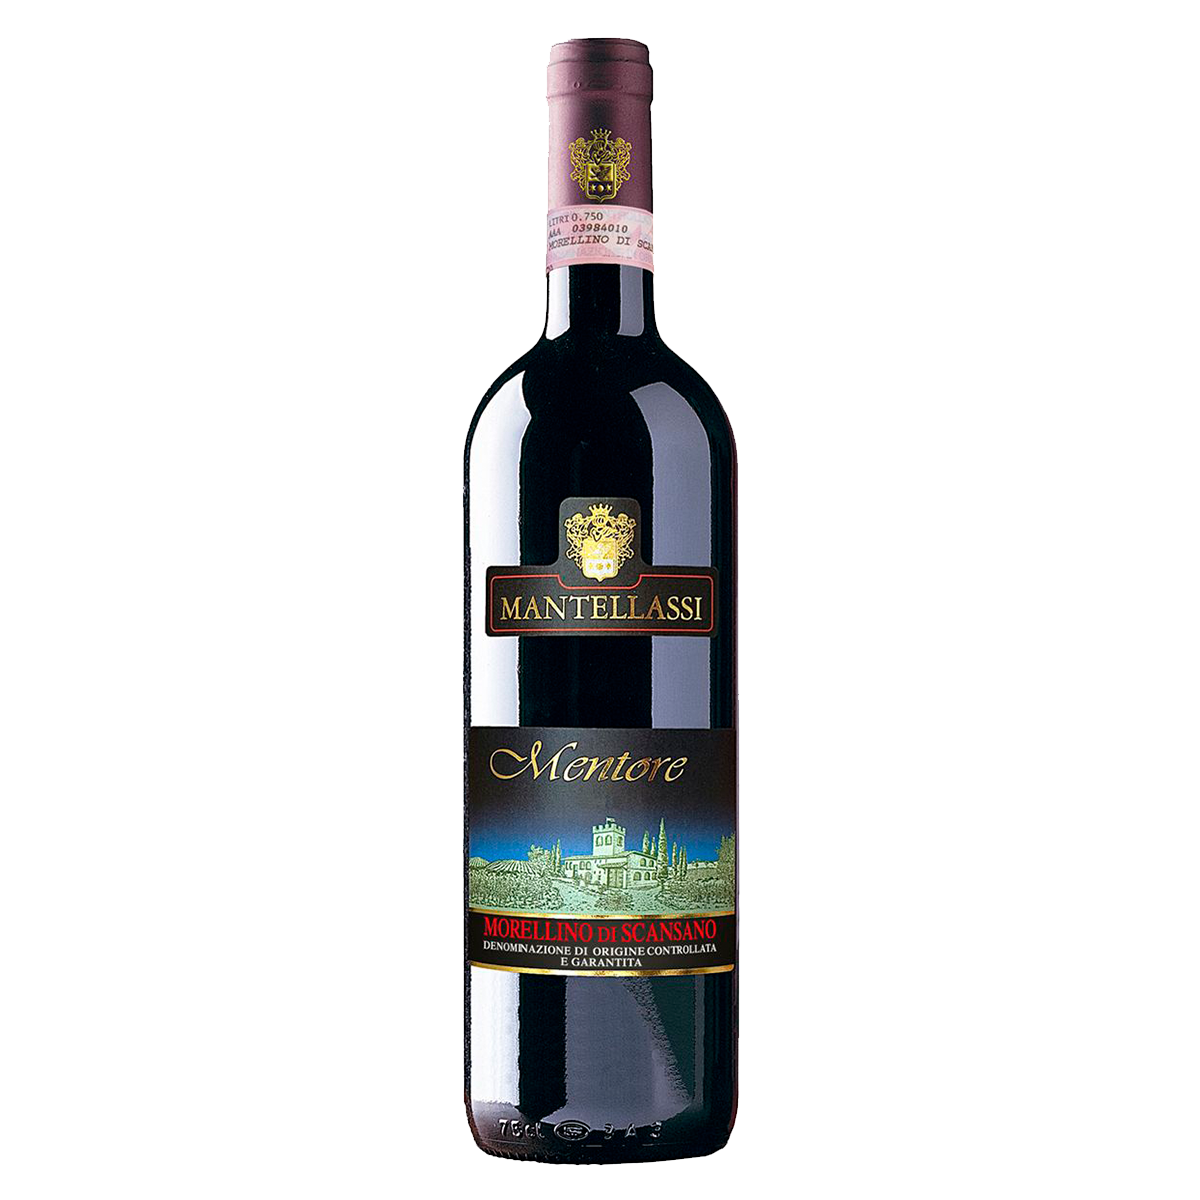 ITTM1102 義大利馬得利門朵高級紅酒Mantellassi Mentore Morellino di Scansano D.O.C.G.